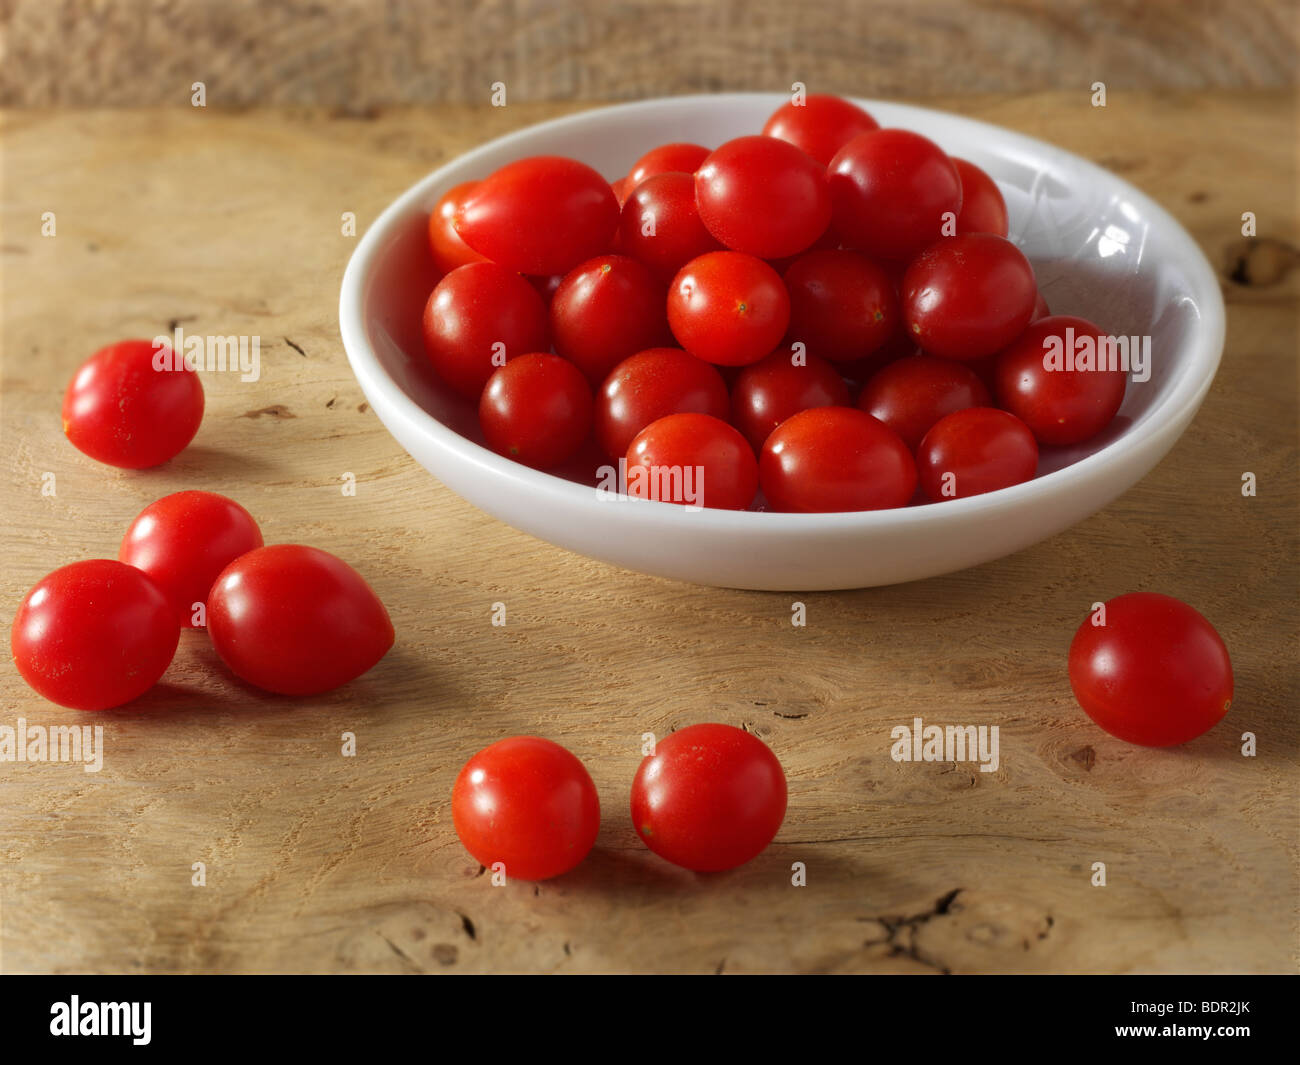 Fresh Tom Tom tomatoes Stock Photo